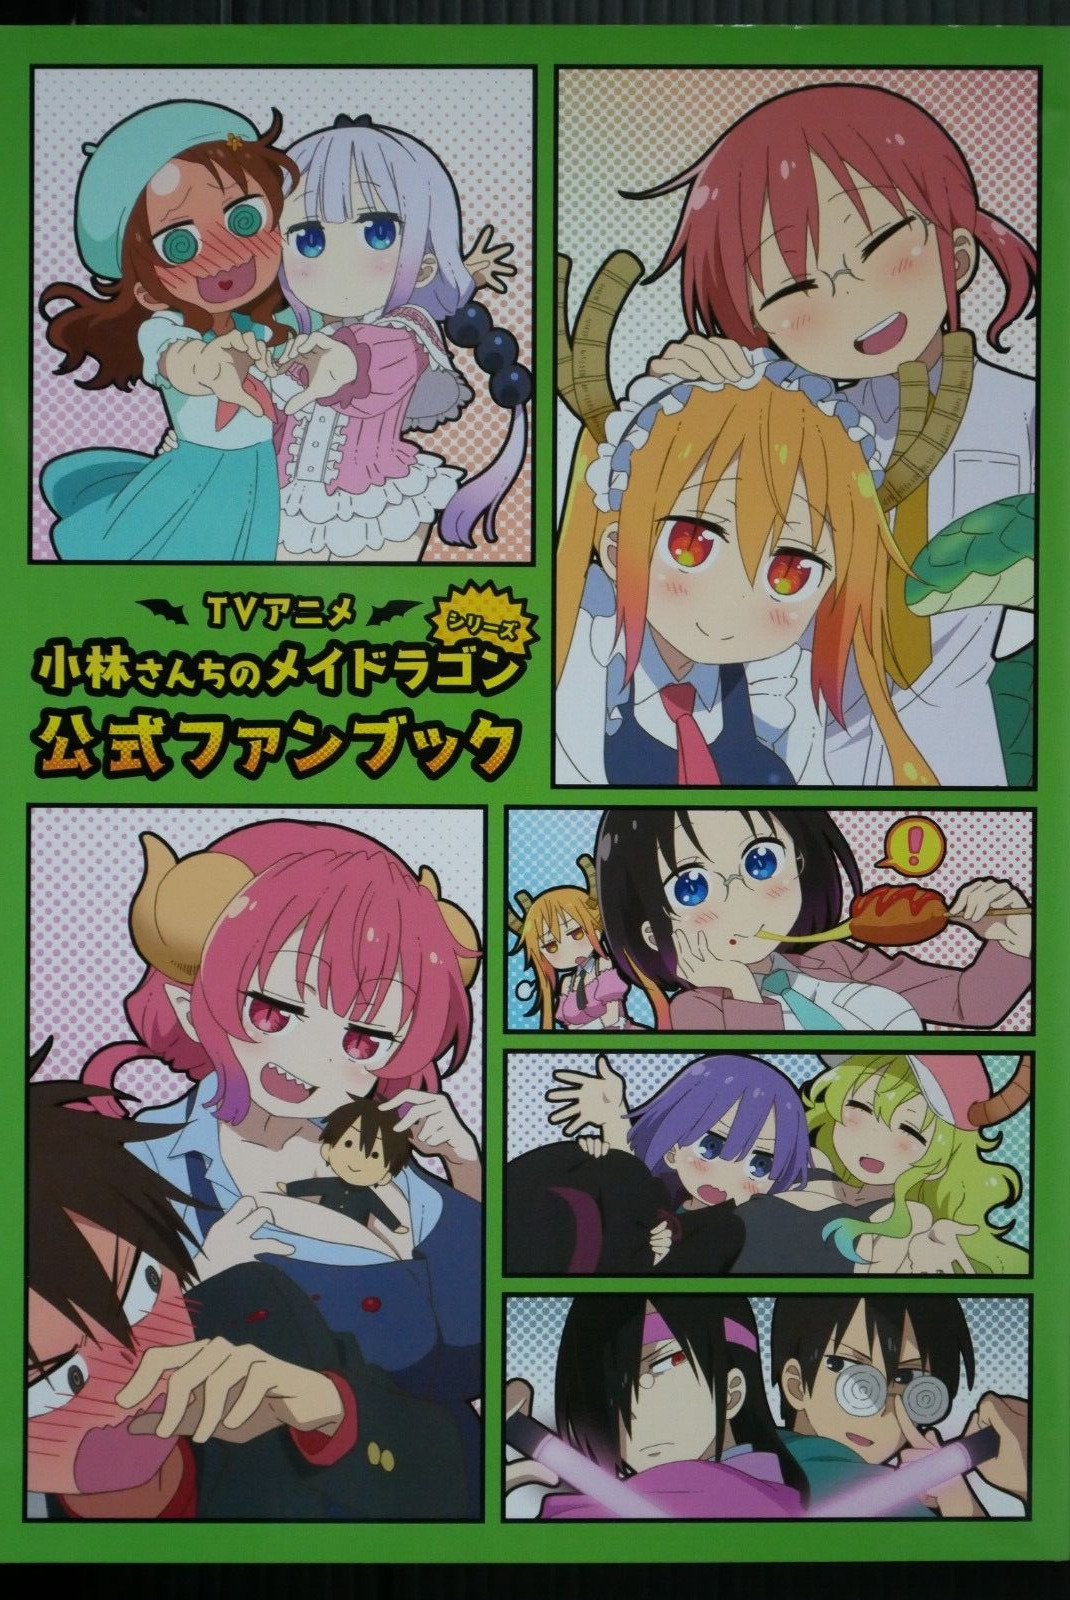 SHOHAN TV Anime Miss Kobayashi's Dragon Maid Series Official Fan Book - JAPAN